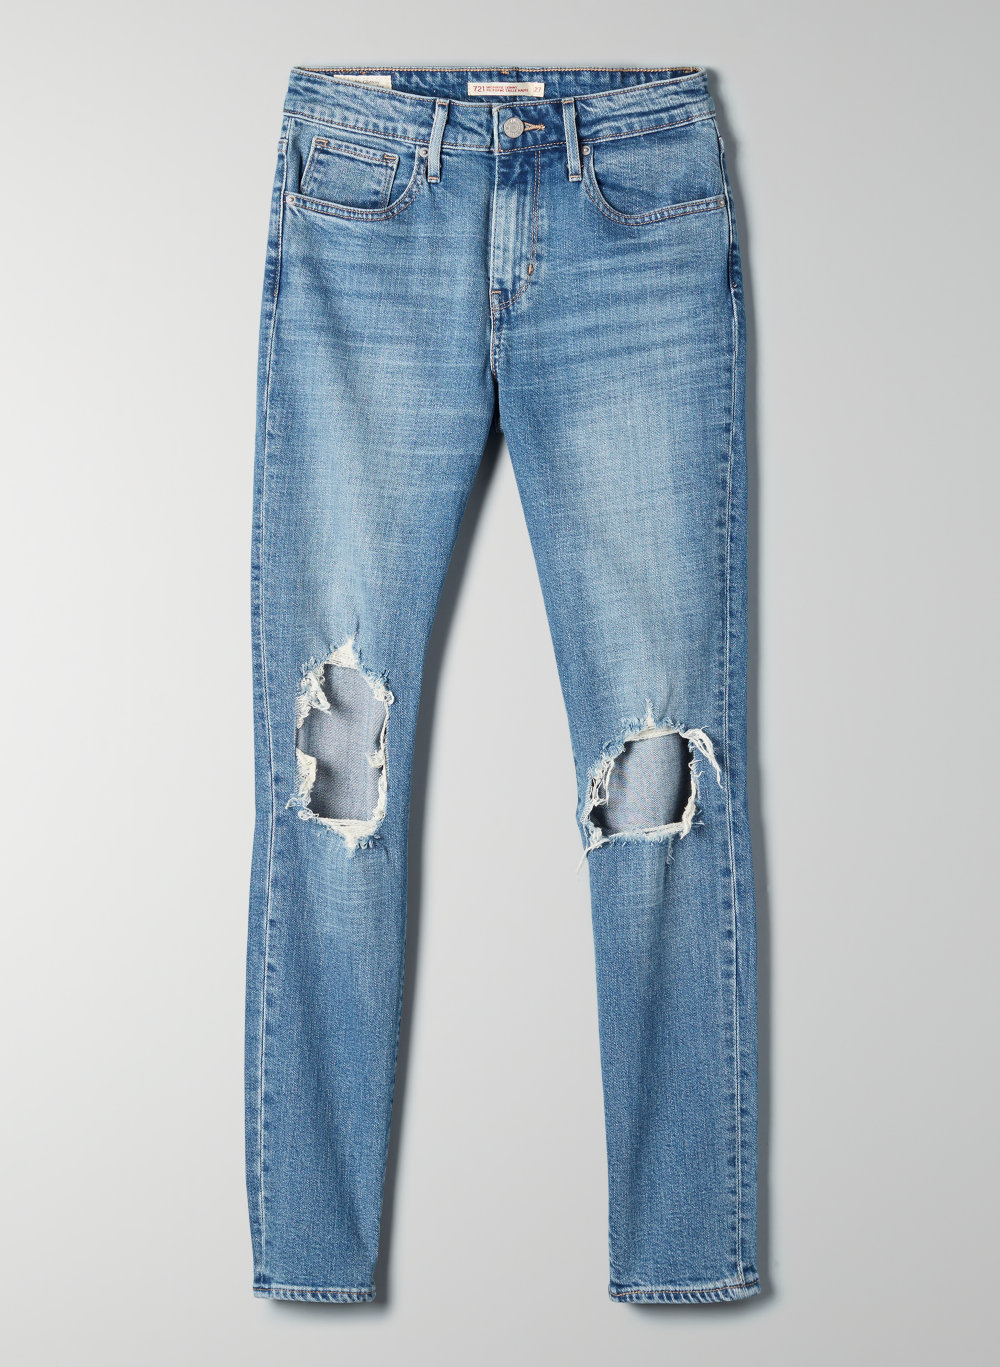 levi's 721 skinny jeans in rugged indigo